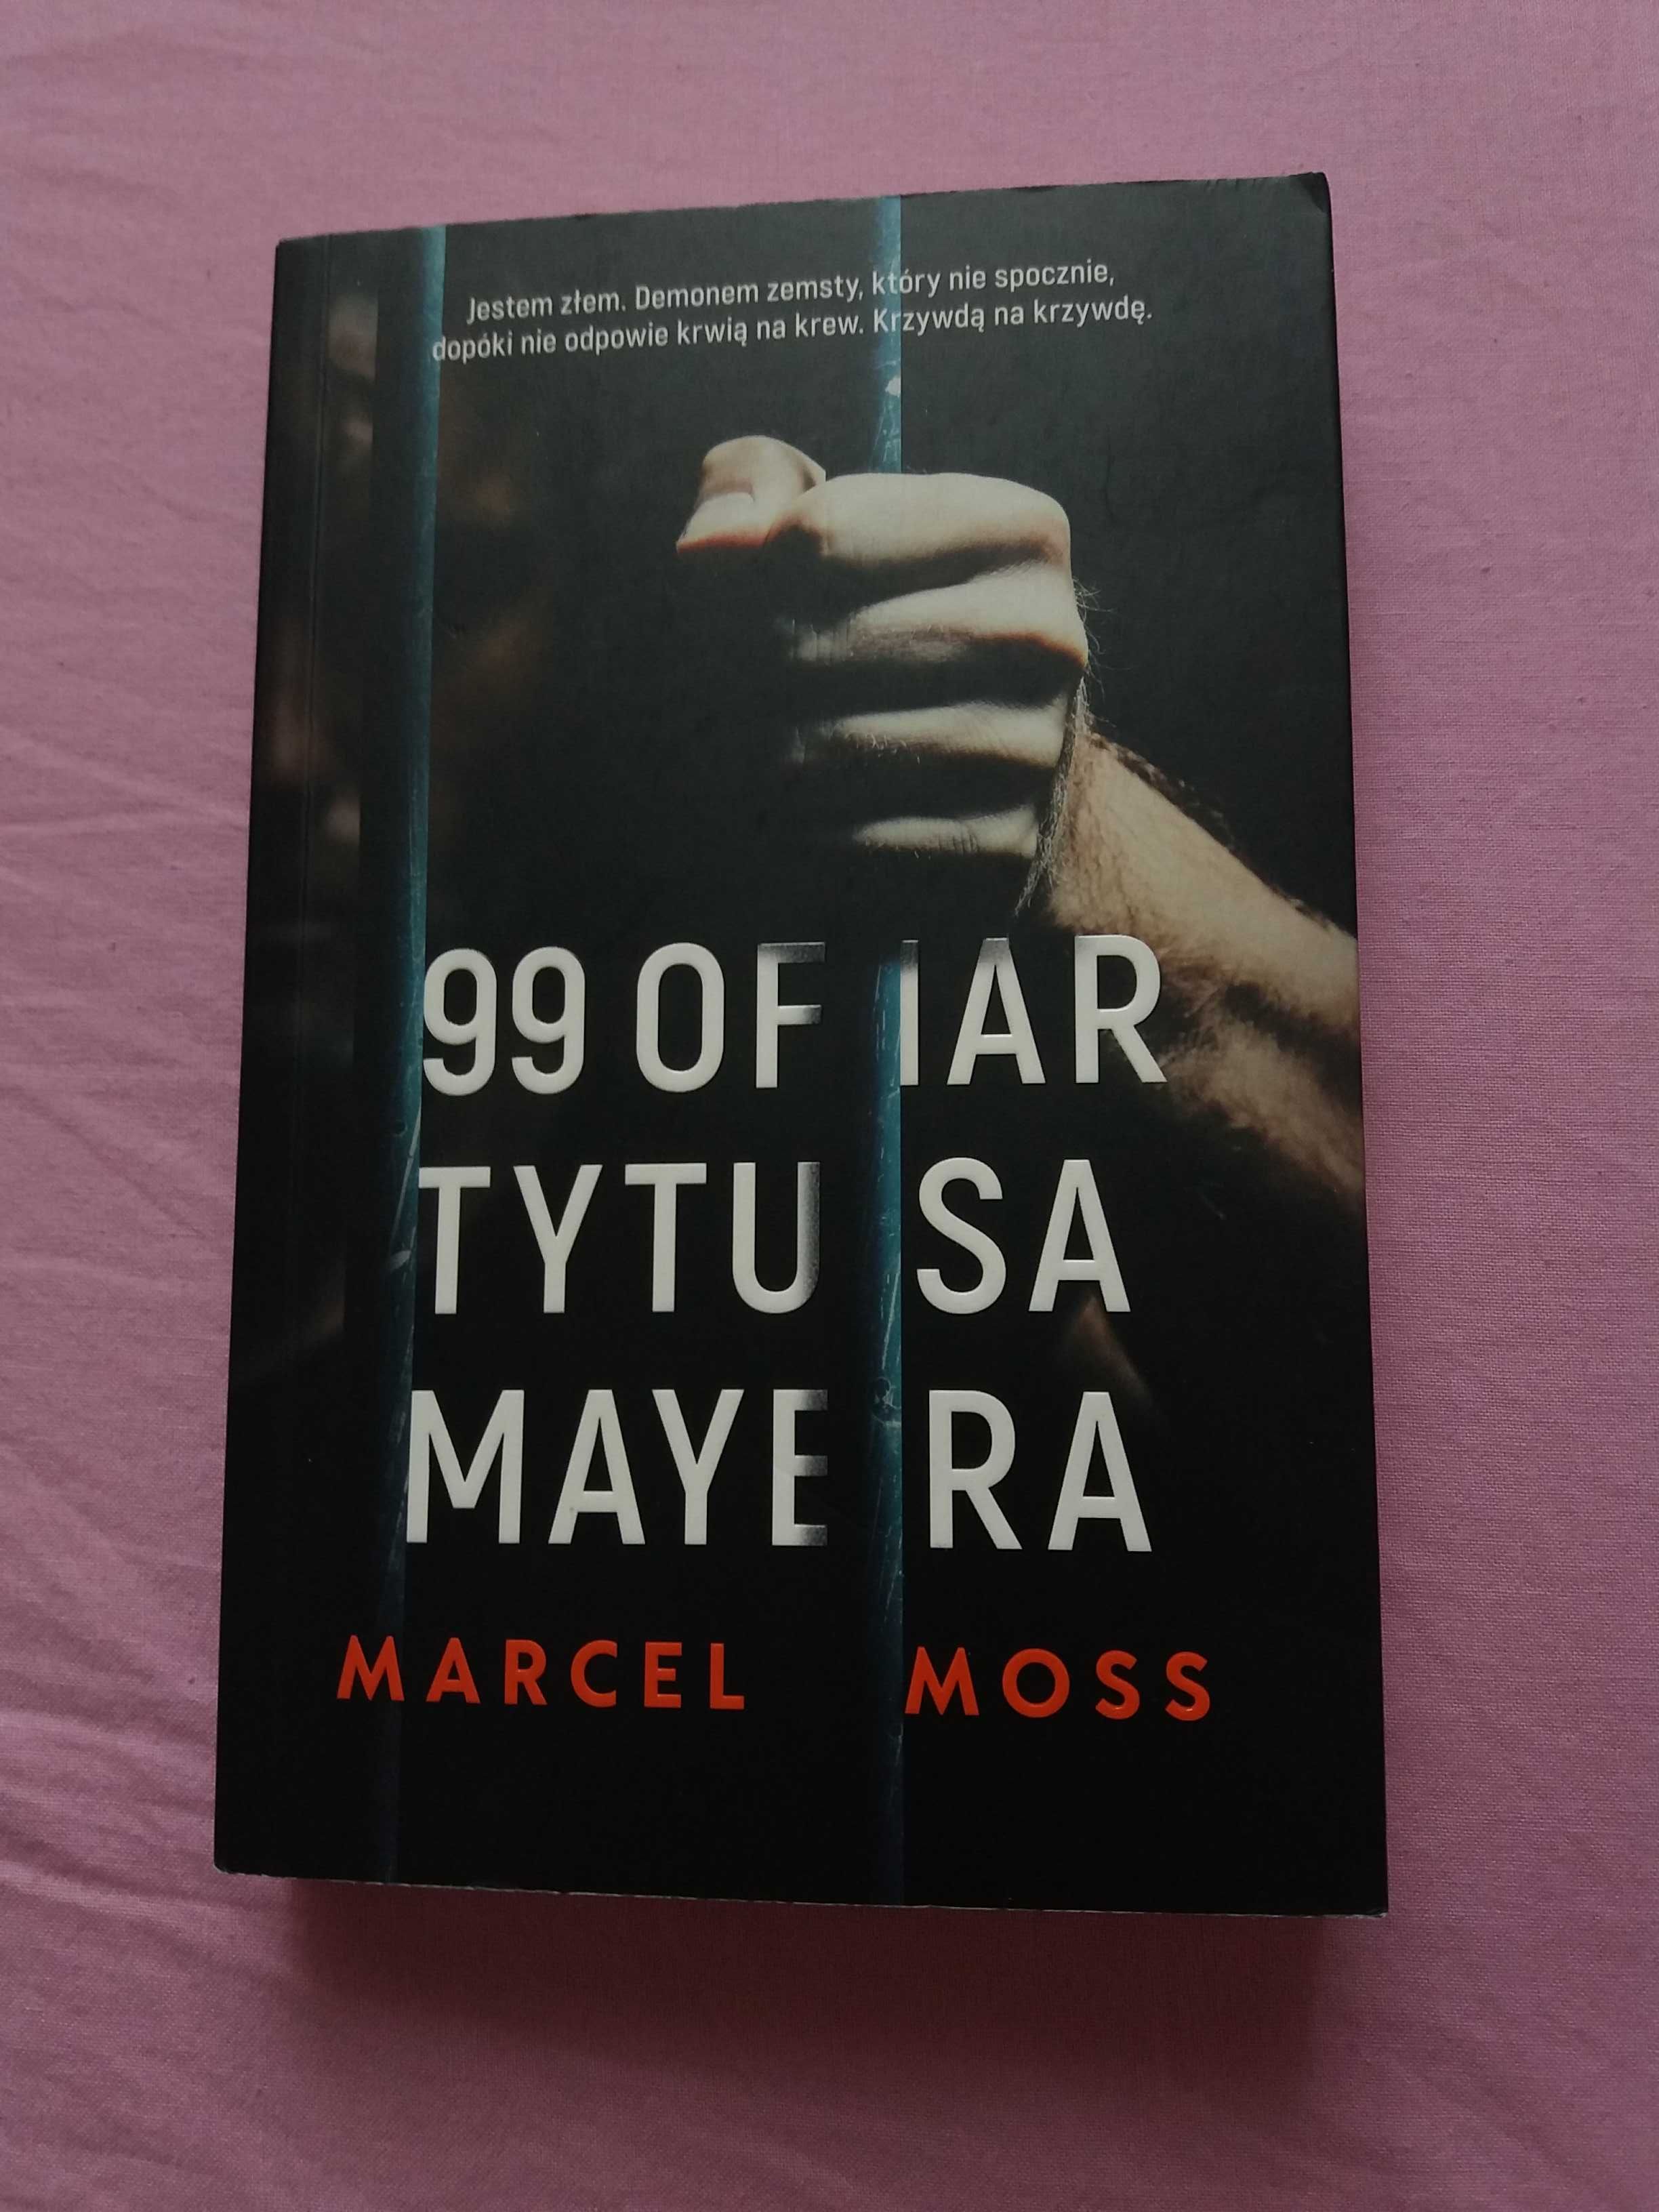 99 Ofiar Tytusa Mayera Marcel Moss kryminal thriller